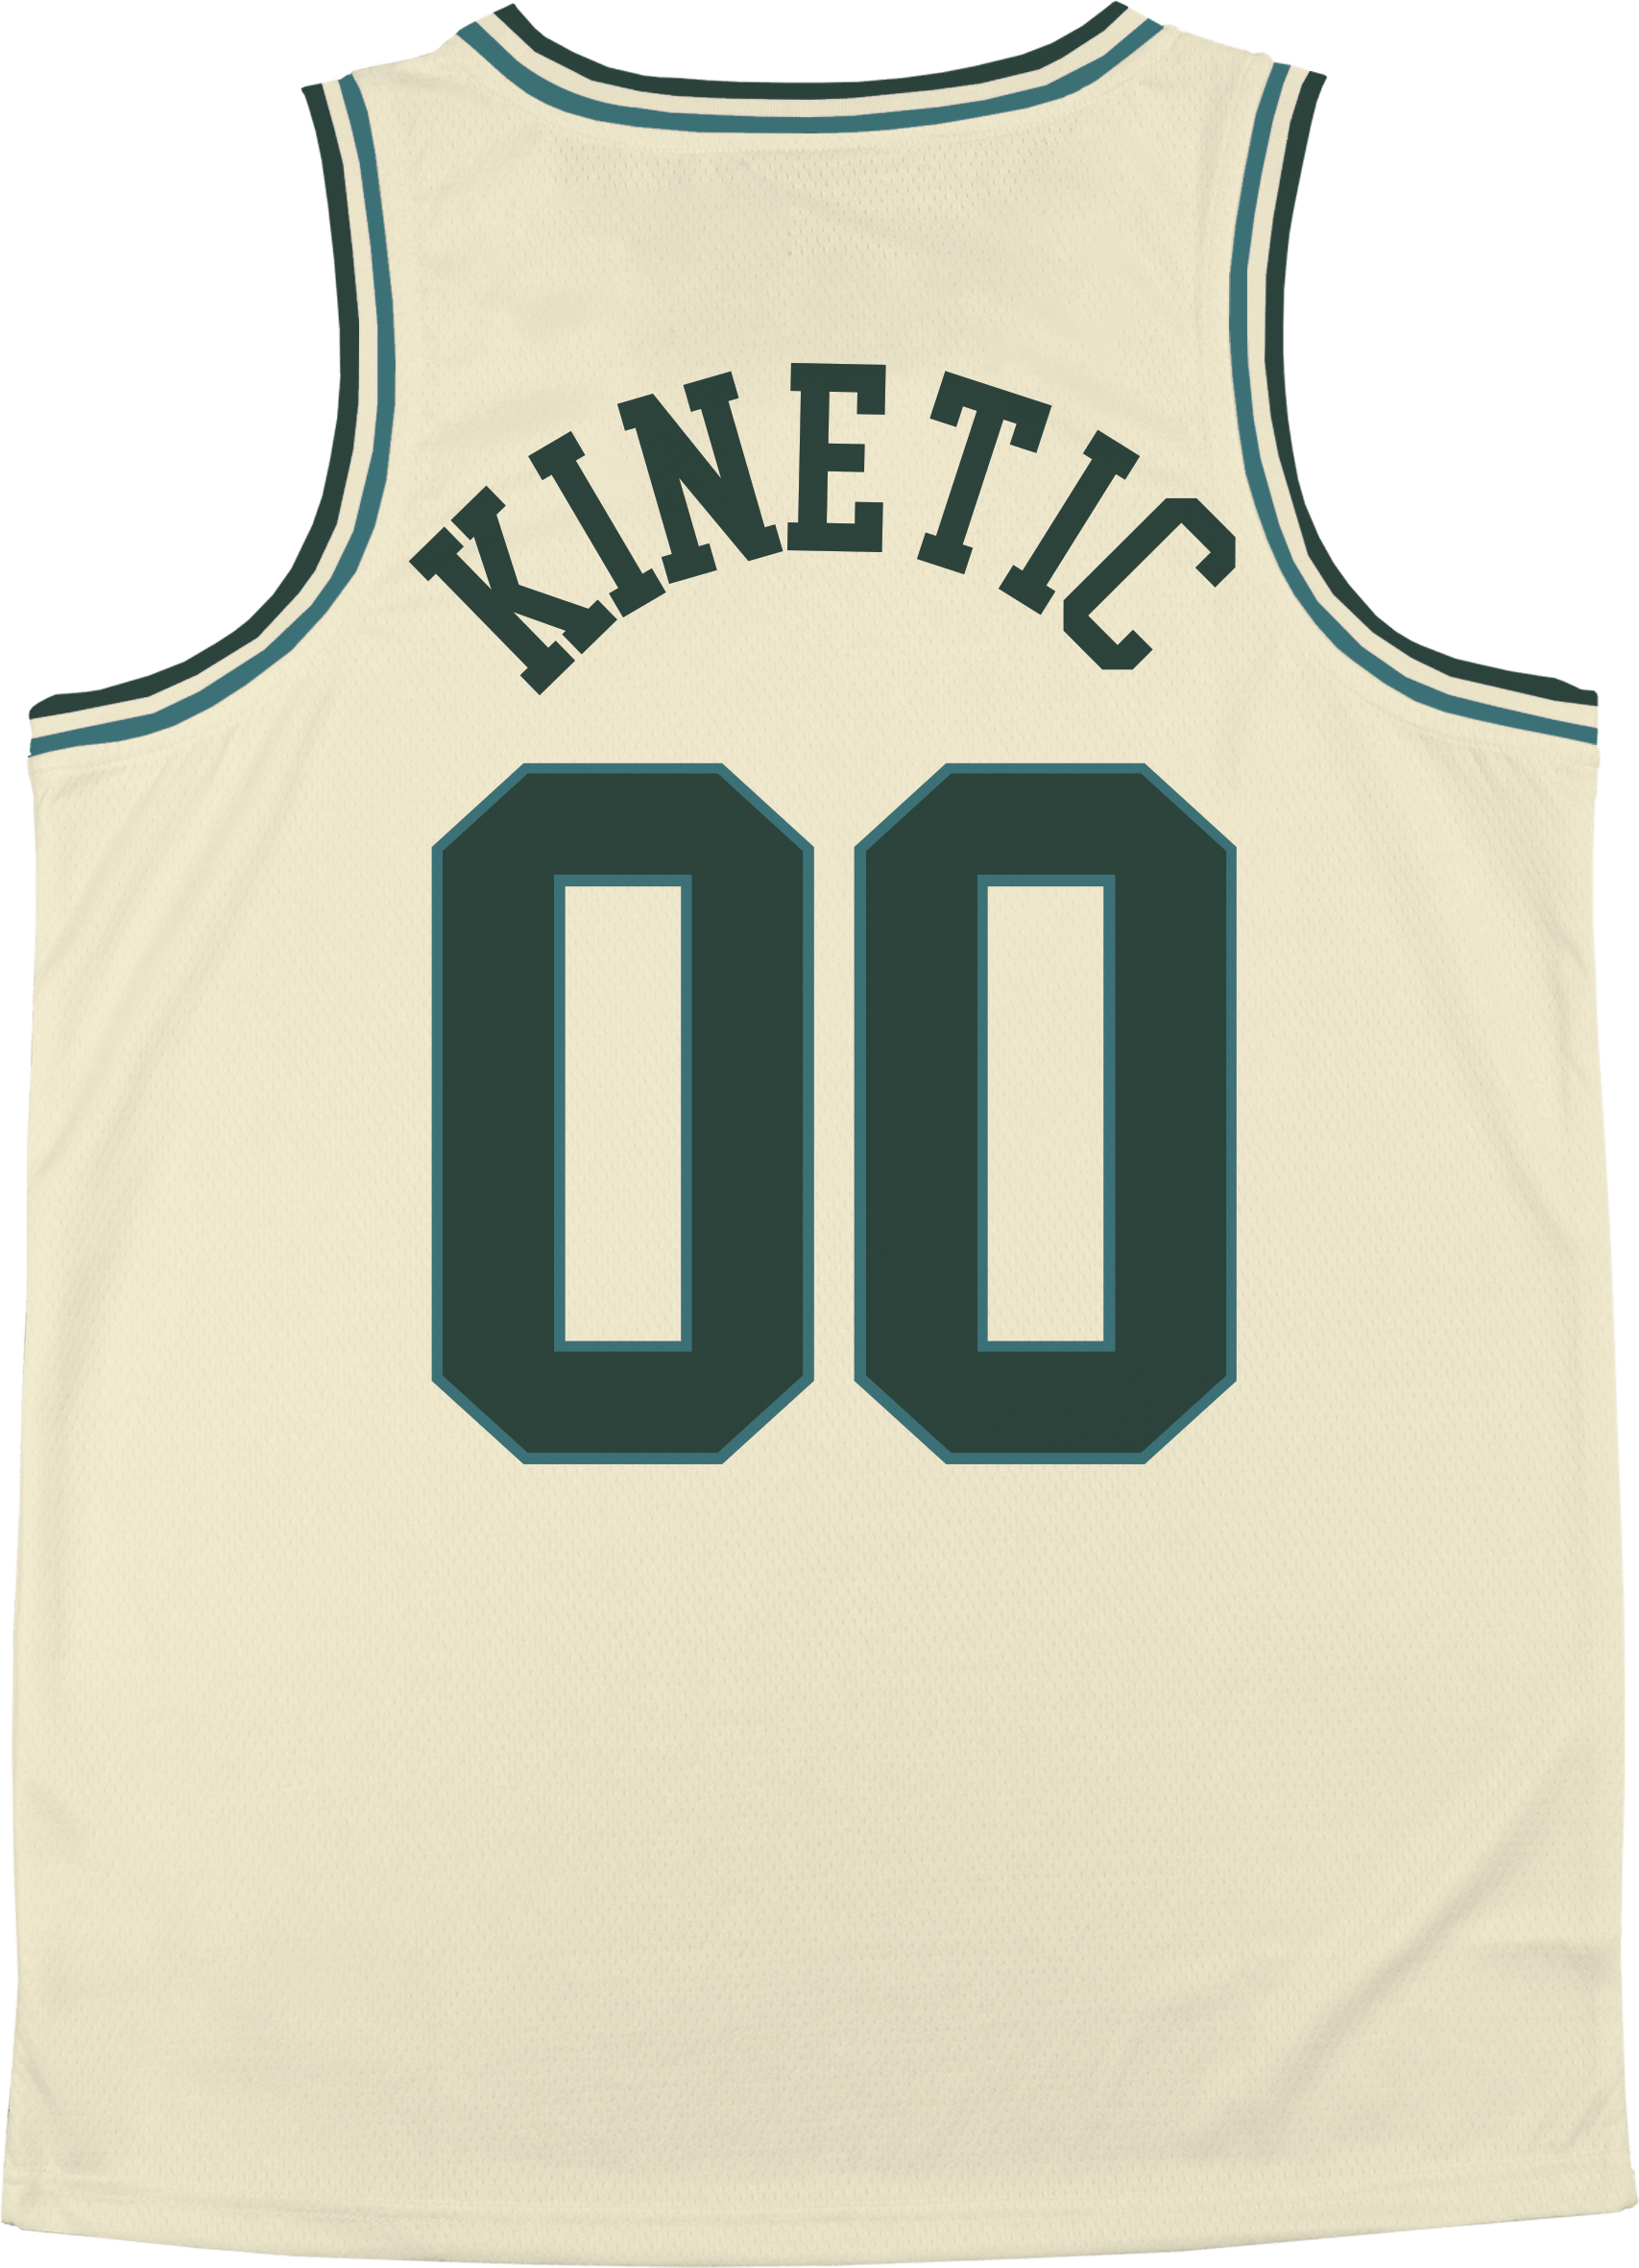 Phi Kappa Sigma - Buttercream Basketball Jersey - Kinetic Society